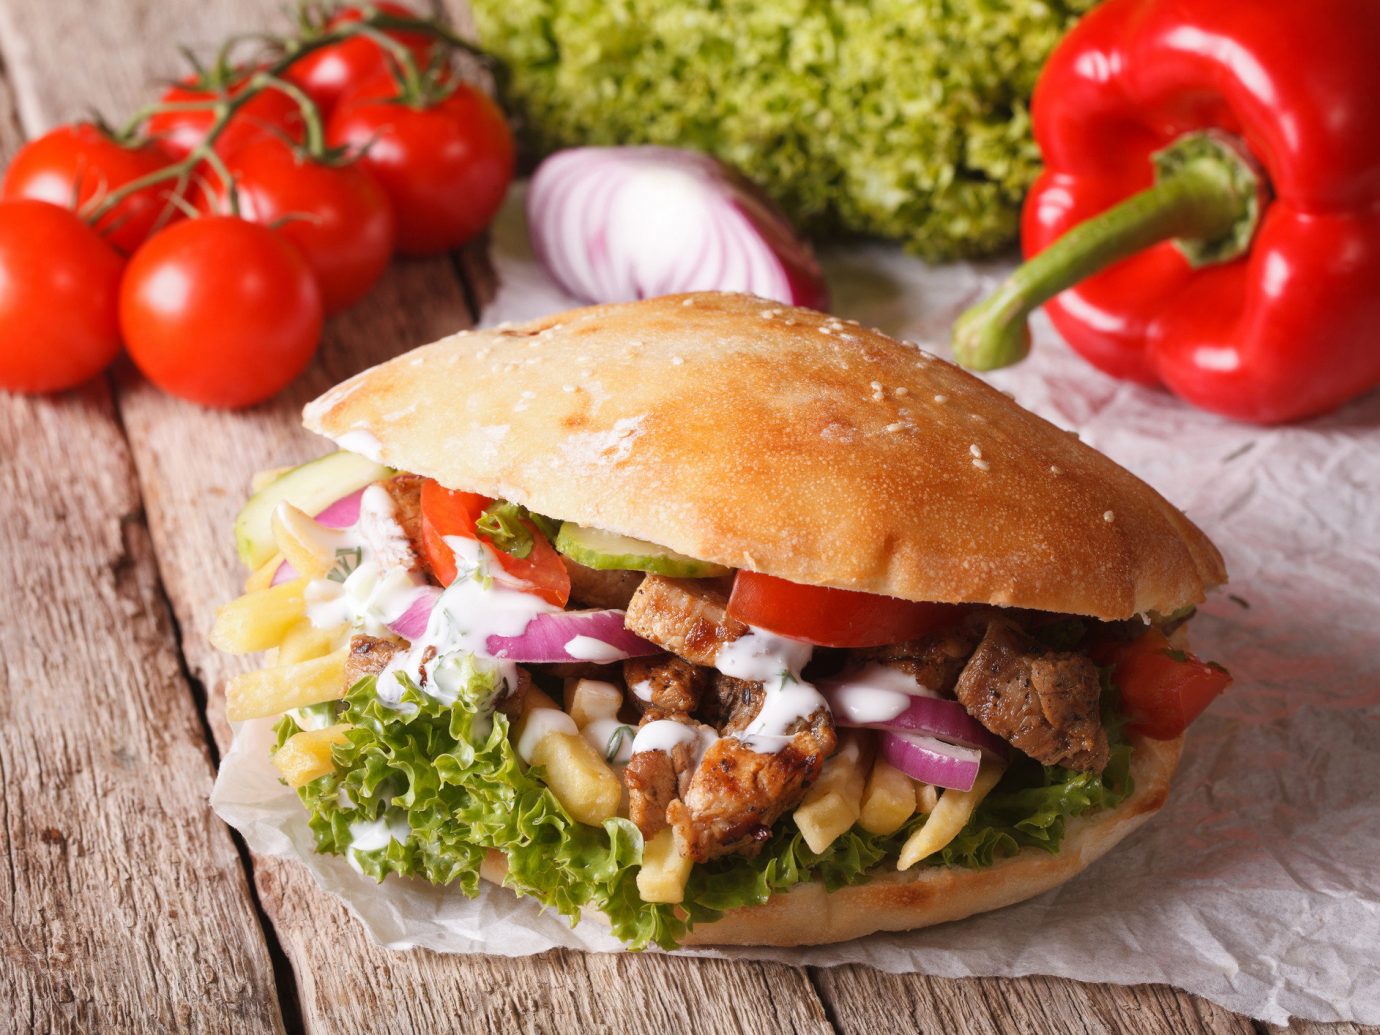 Food + Drink food dish sandwich veggie burger meat cuisine tomato snack food meal produce vegetable fresh